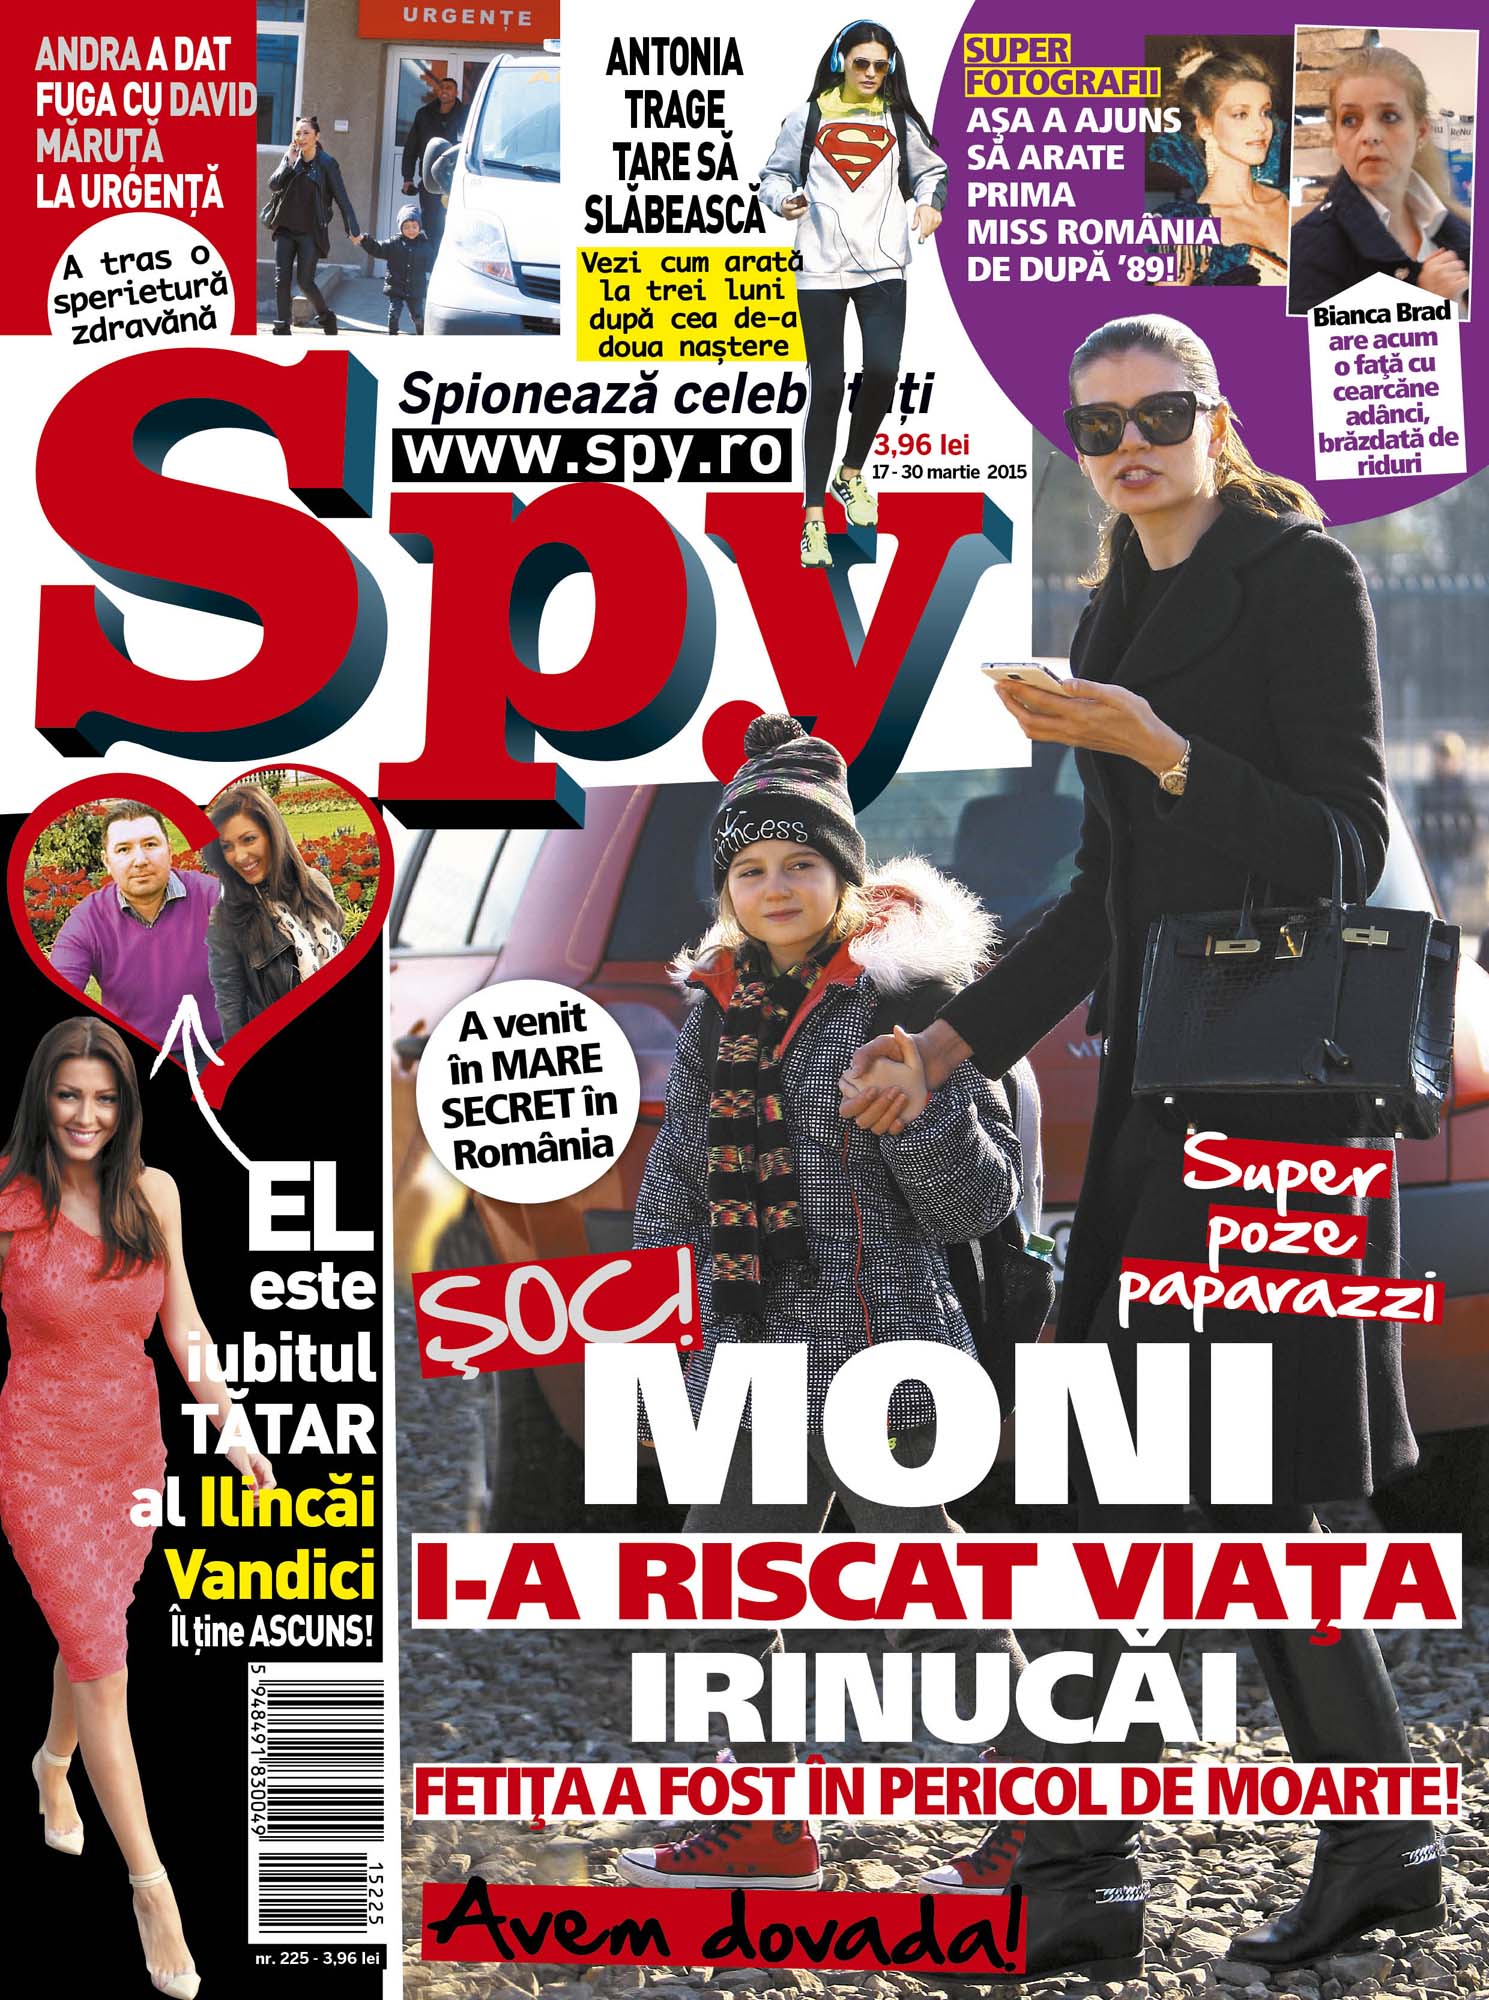 Paparazzii revistei Spy au surprins-o pe Monica Gabor intr-o vizita secreta in Romania